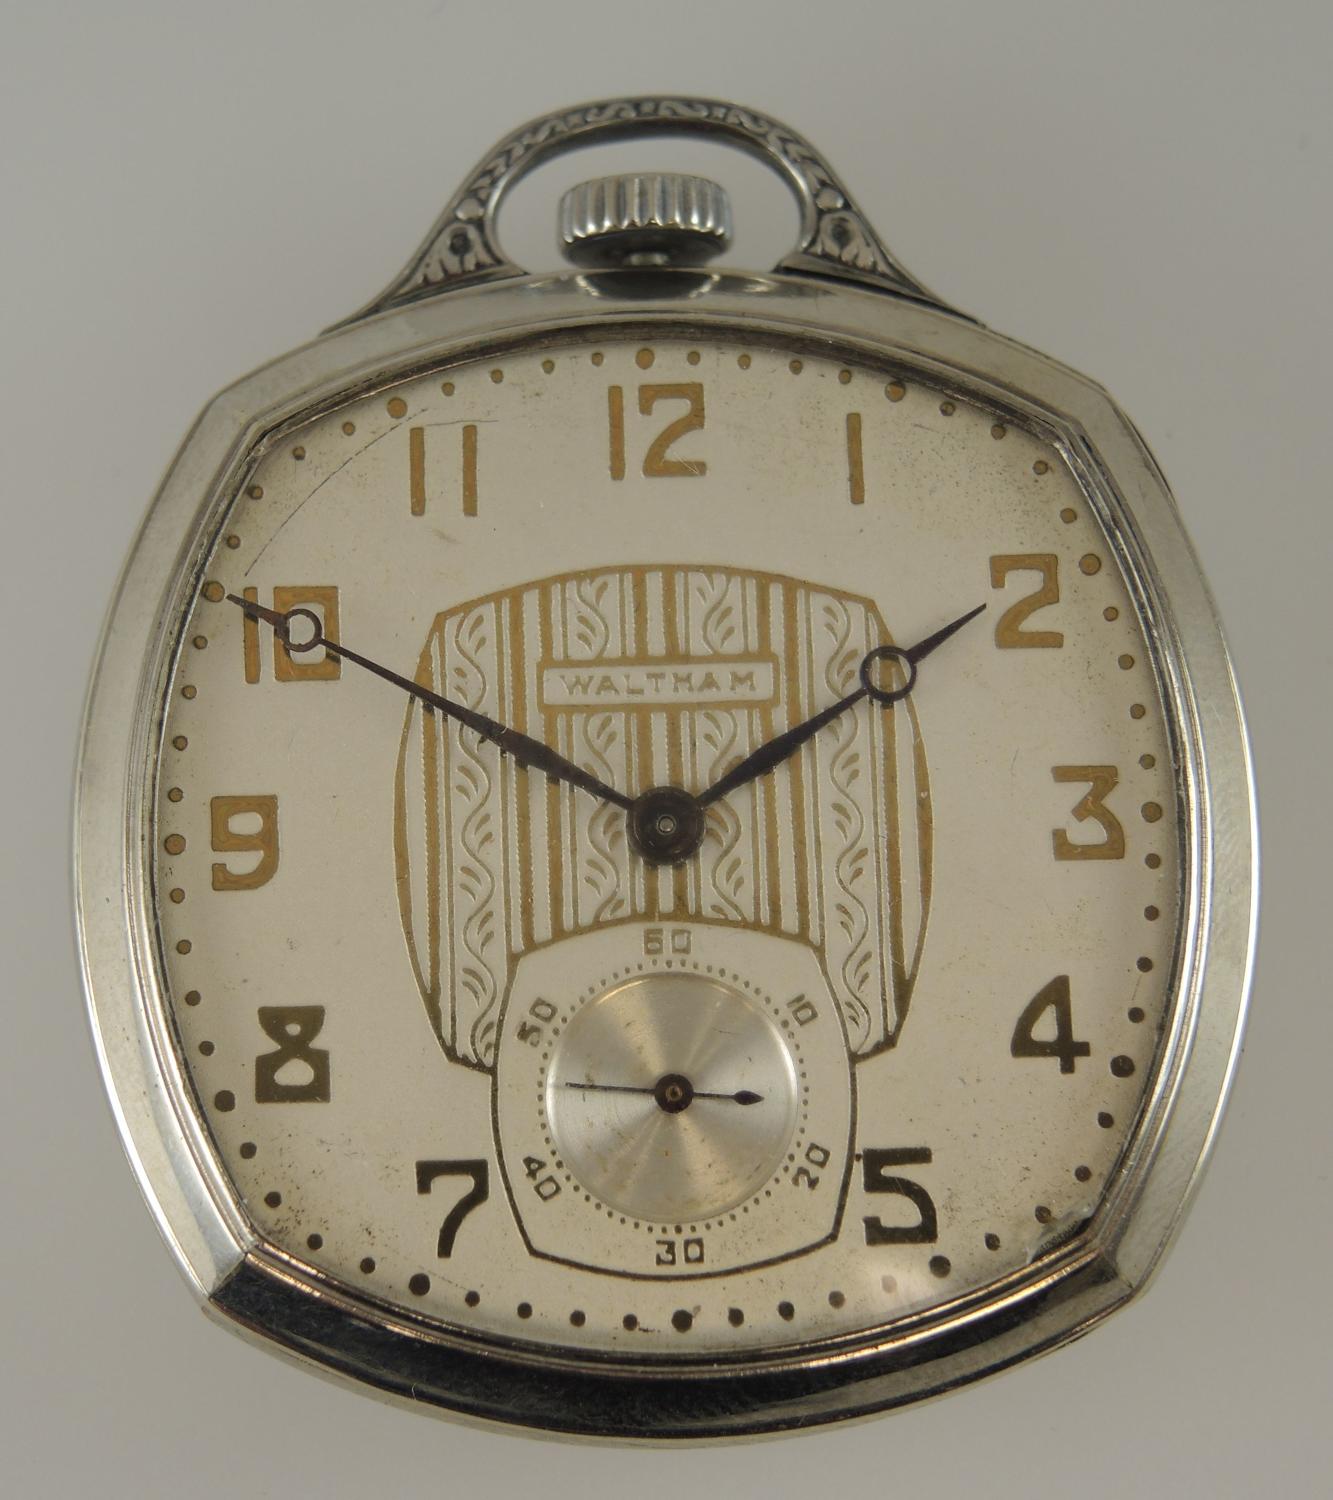 Stylish Square cased pocket watch by Waltham c1928